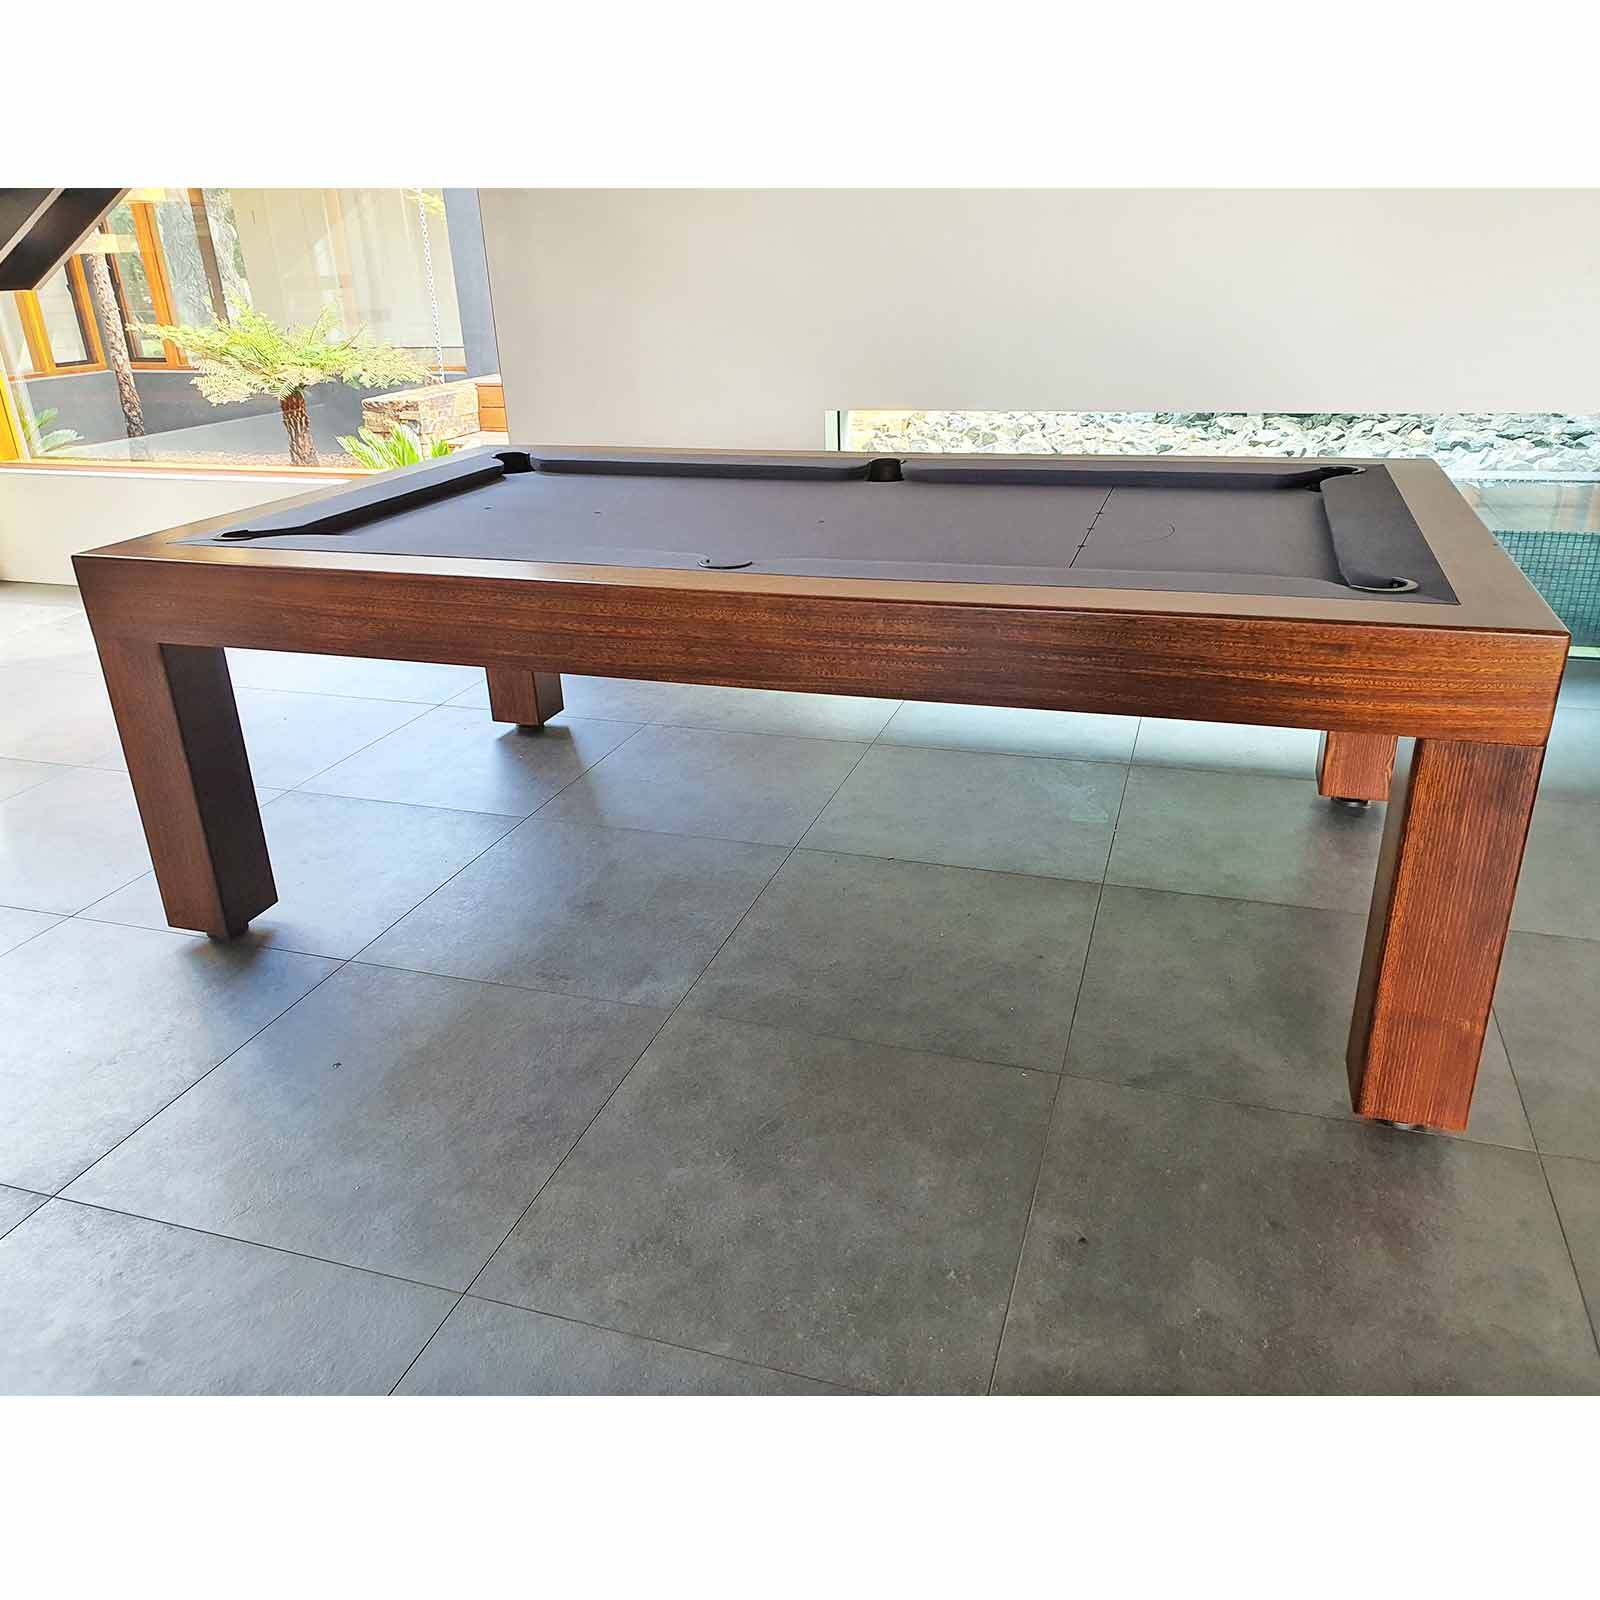 8 Foot Slate Statesman Pool Table/ Dining Table,Timber